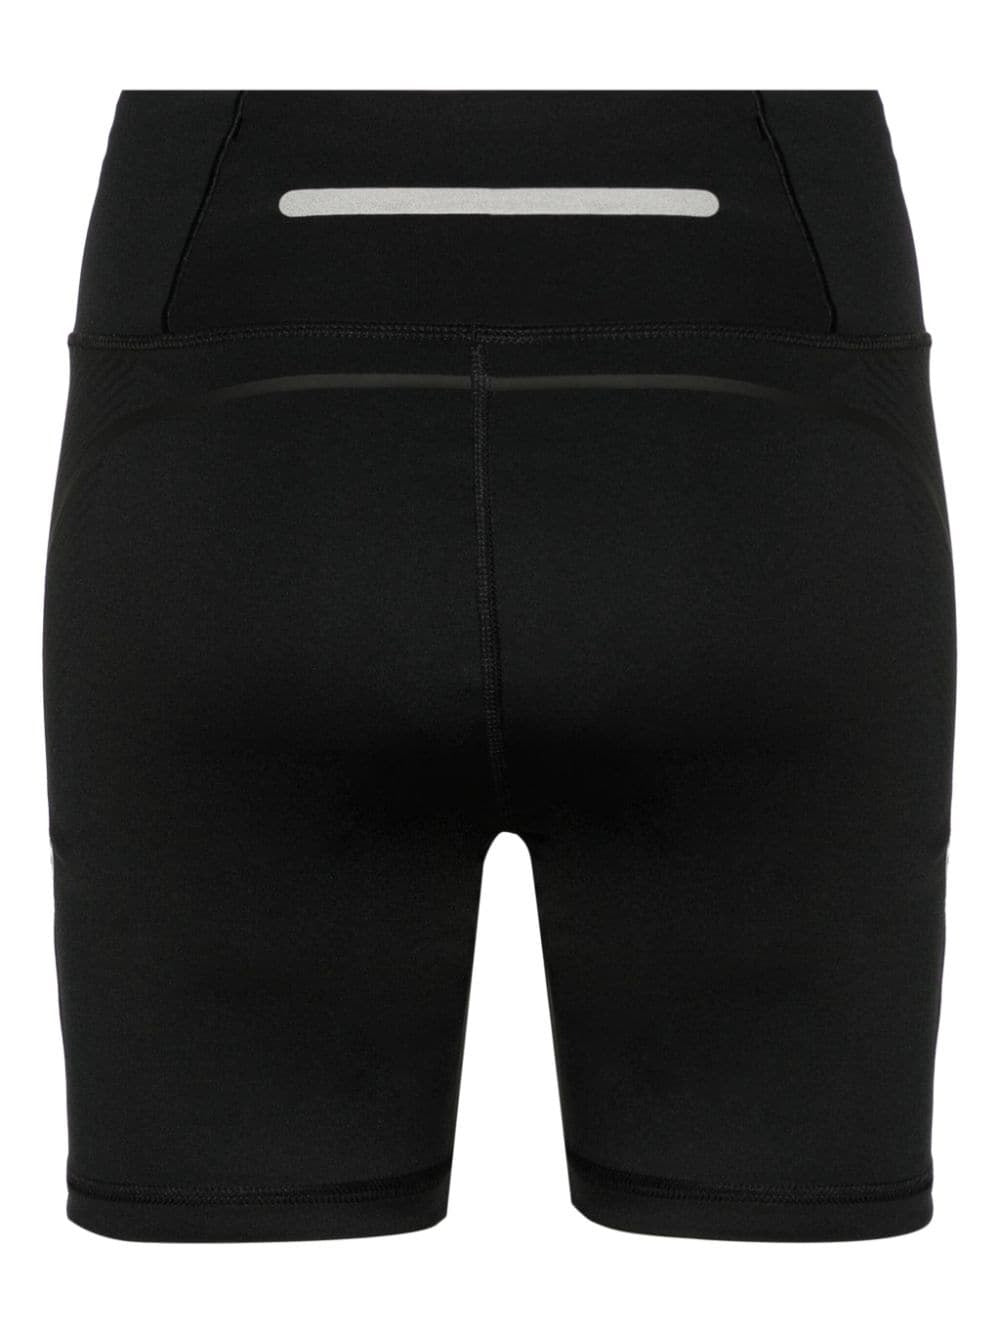 Adidas x Stella McCartney Running Shorts in Black